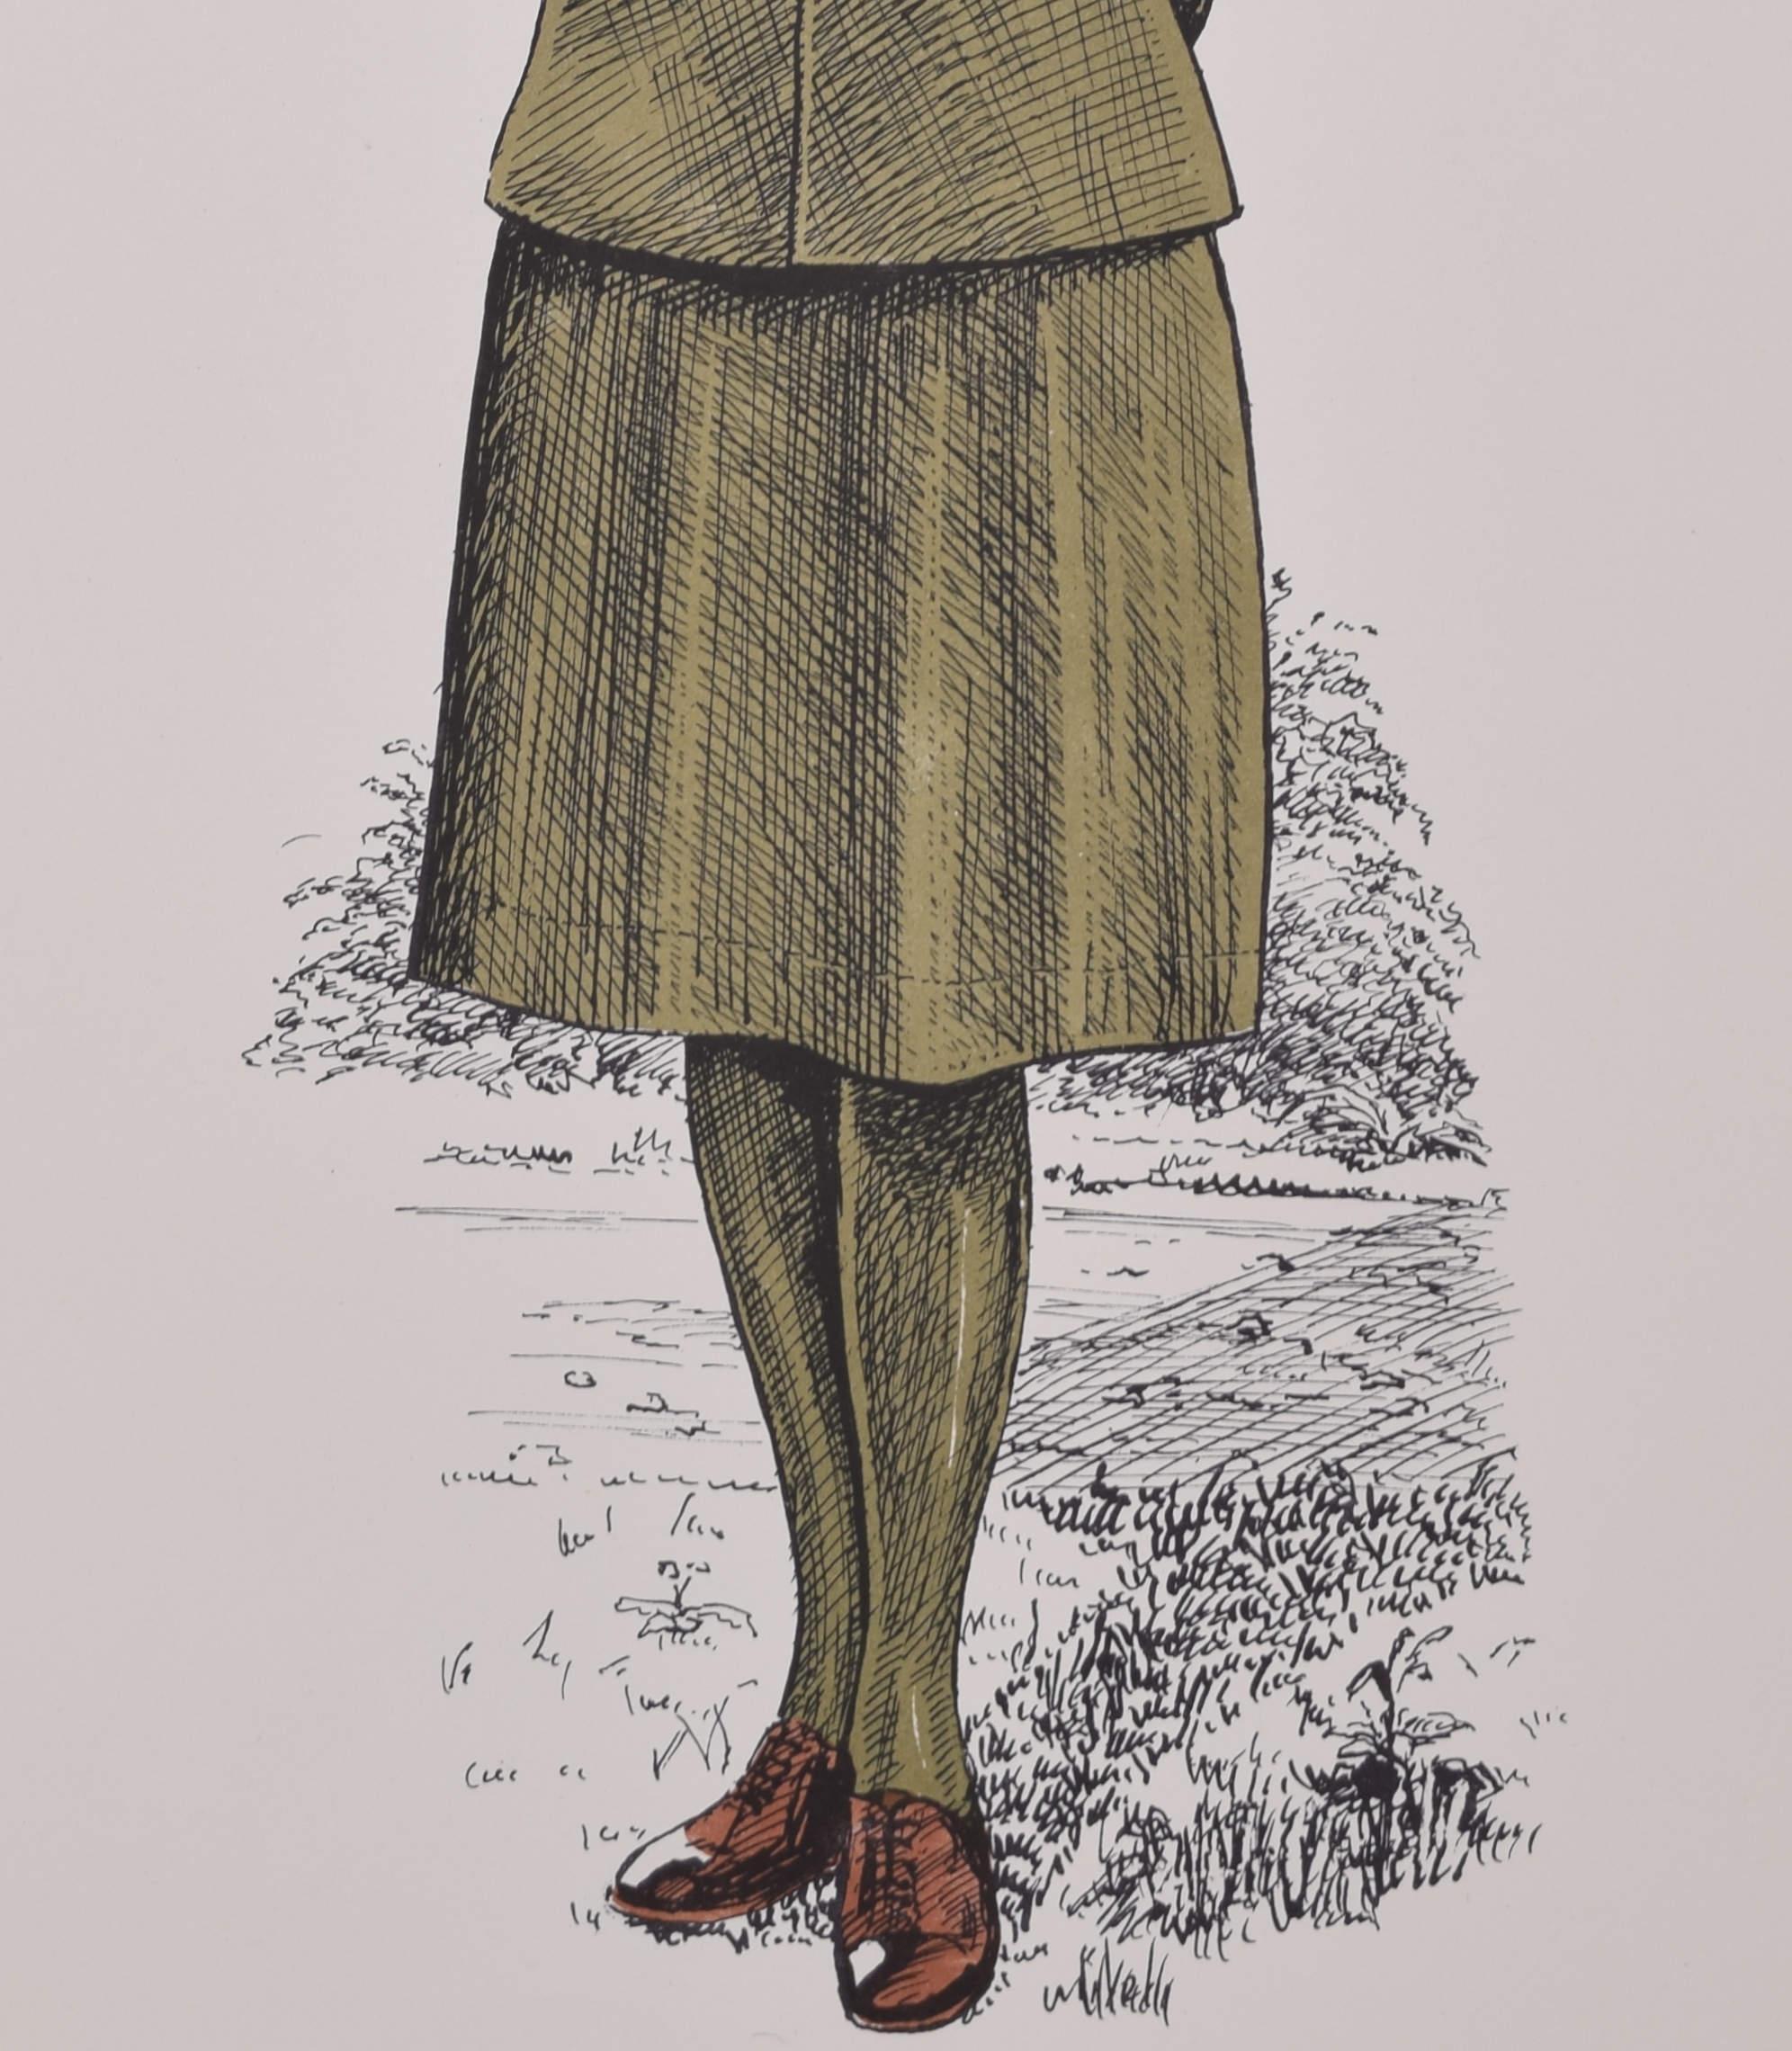 Uniform des Auxiliary Territorial Service (heute: Women's Royal Army Corps) 1939 - 1945
Lithographie
50 x 31 cm

Produziert für das Institute of Army Education. Gedruckt für das HM Stationery Office von I A Limited, Southall 51.

Diese Plakate